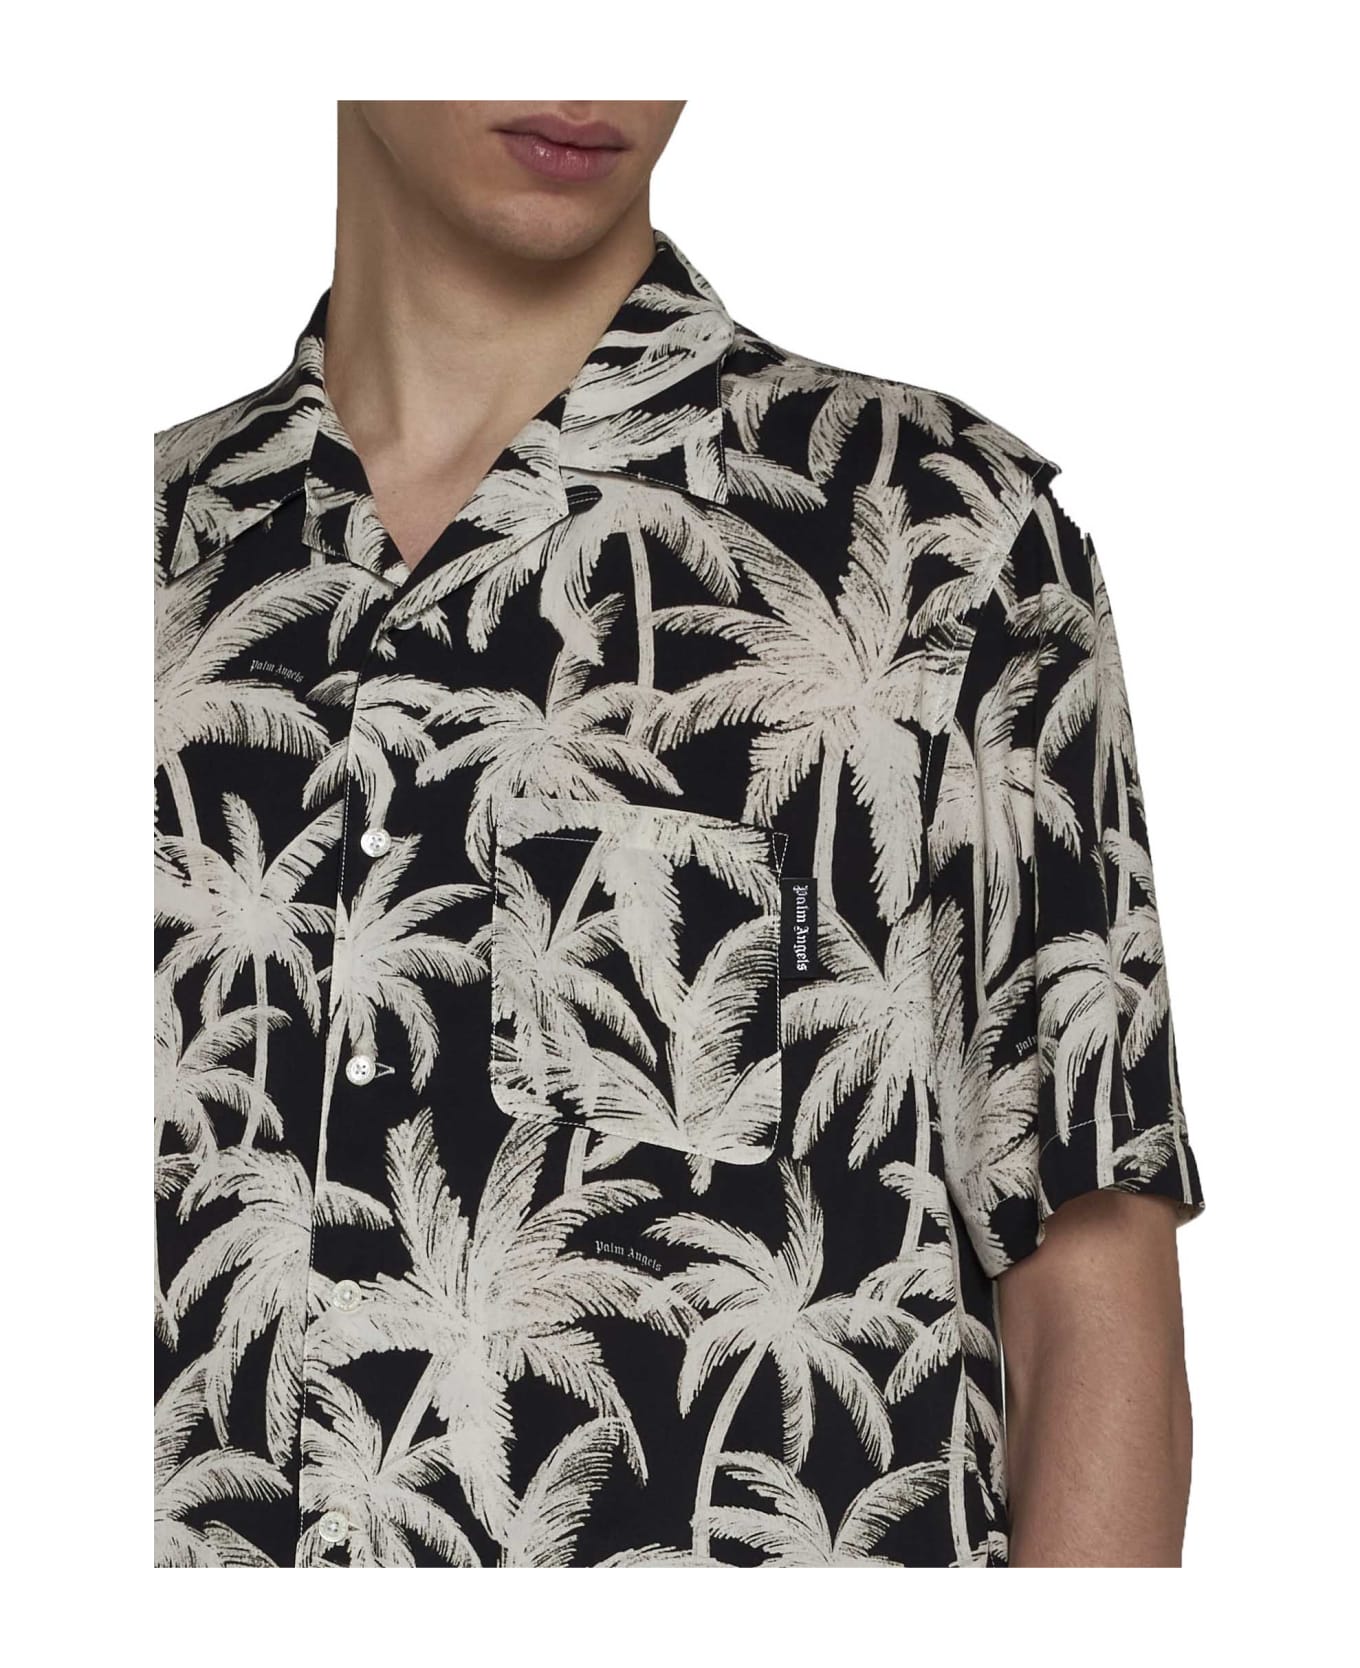 Palm Angels Shirt - Black off white